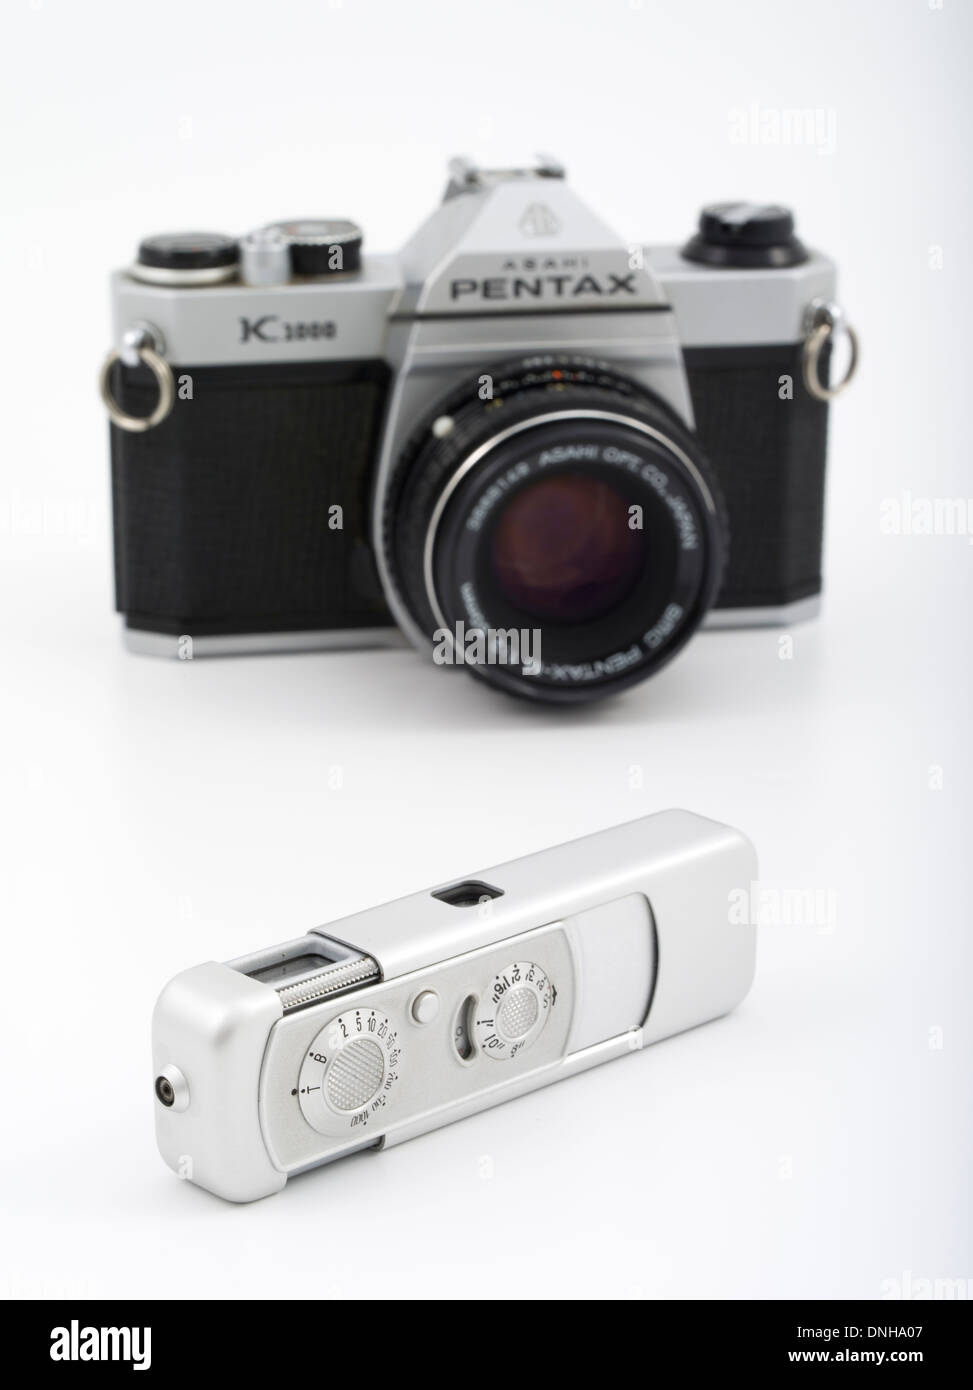 MINOX Wetzlar III Sub Miniatur Spionage-Kamera mit Asahi Pentax K1000-35 mm-Kamera. Stockfoto